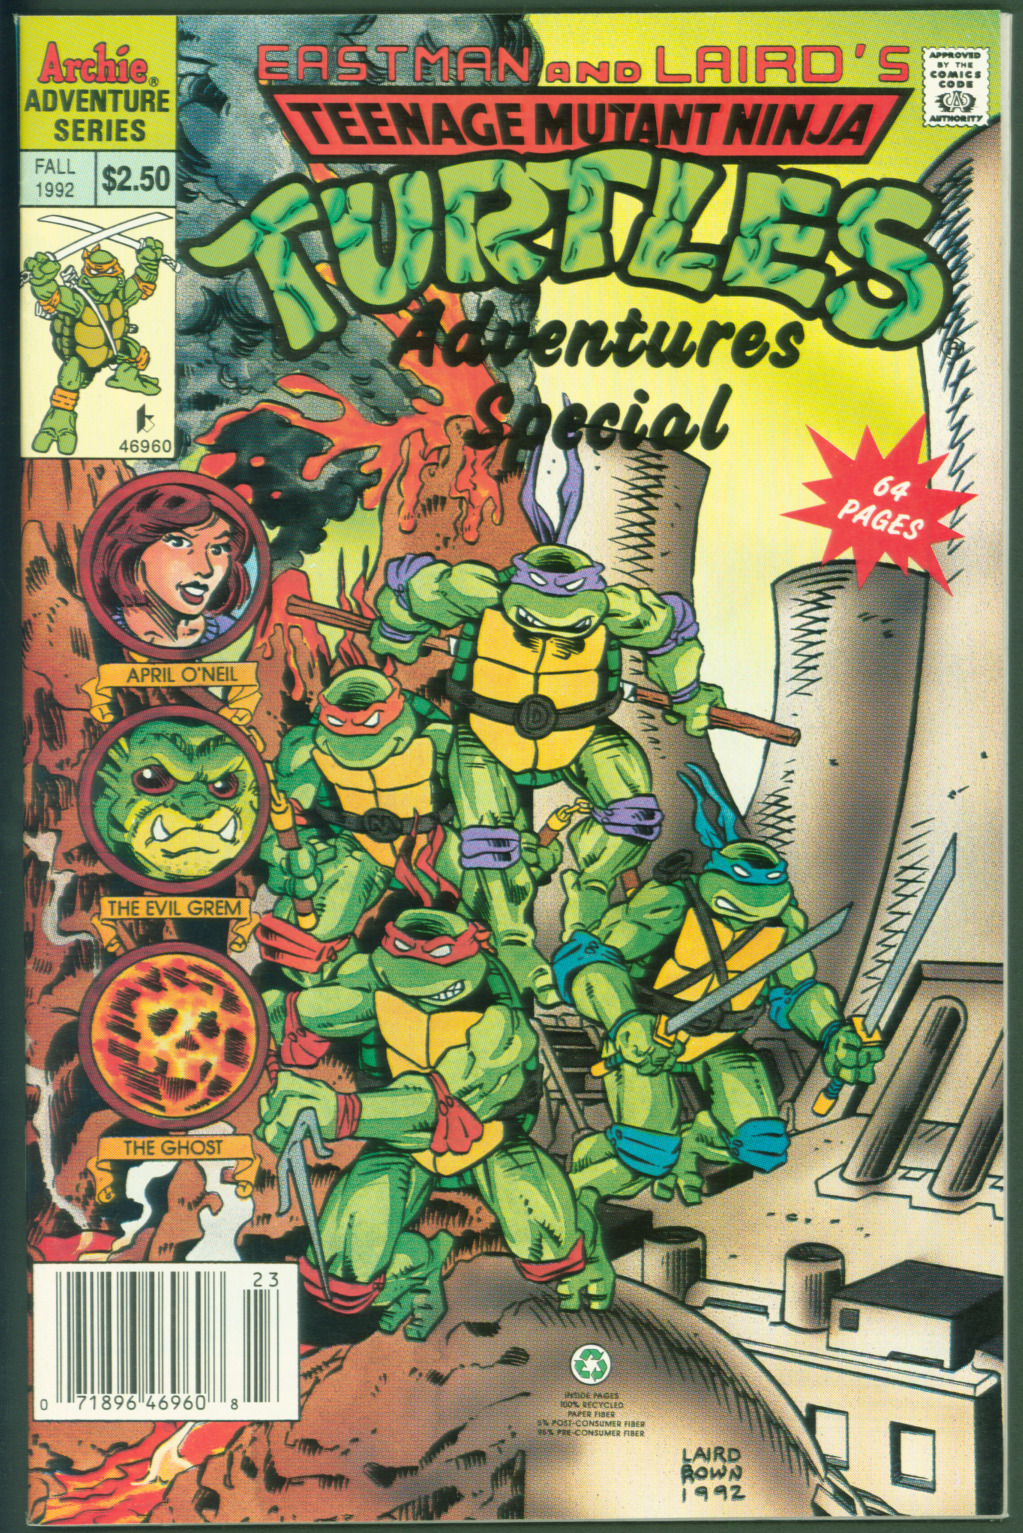 VTG Teenage Mutant Ninja Turtles TMNT Fall 1992 Special VF/NM Newsstand Edition